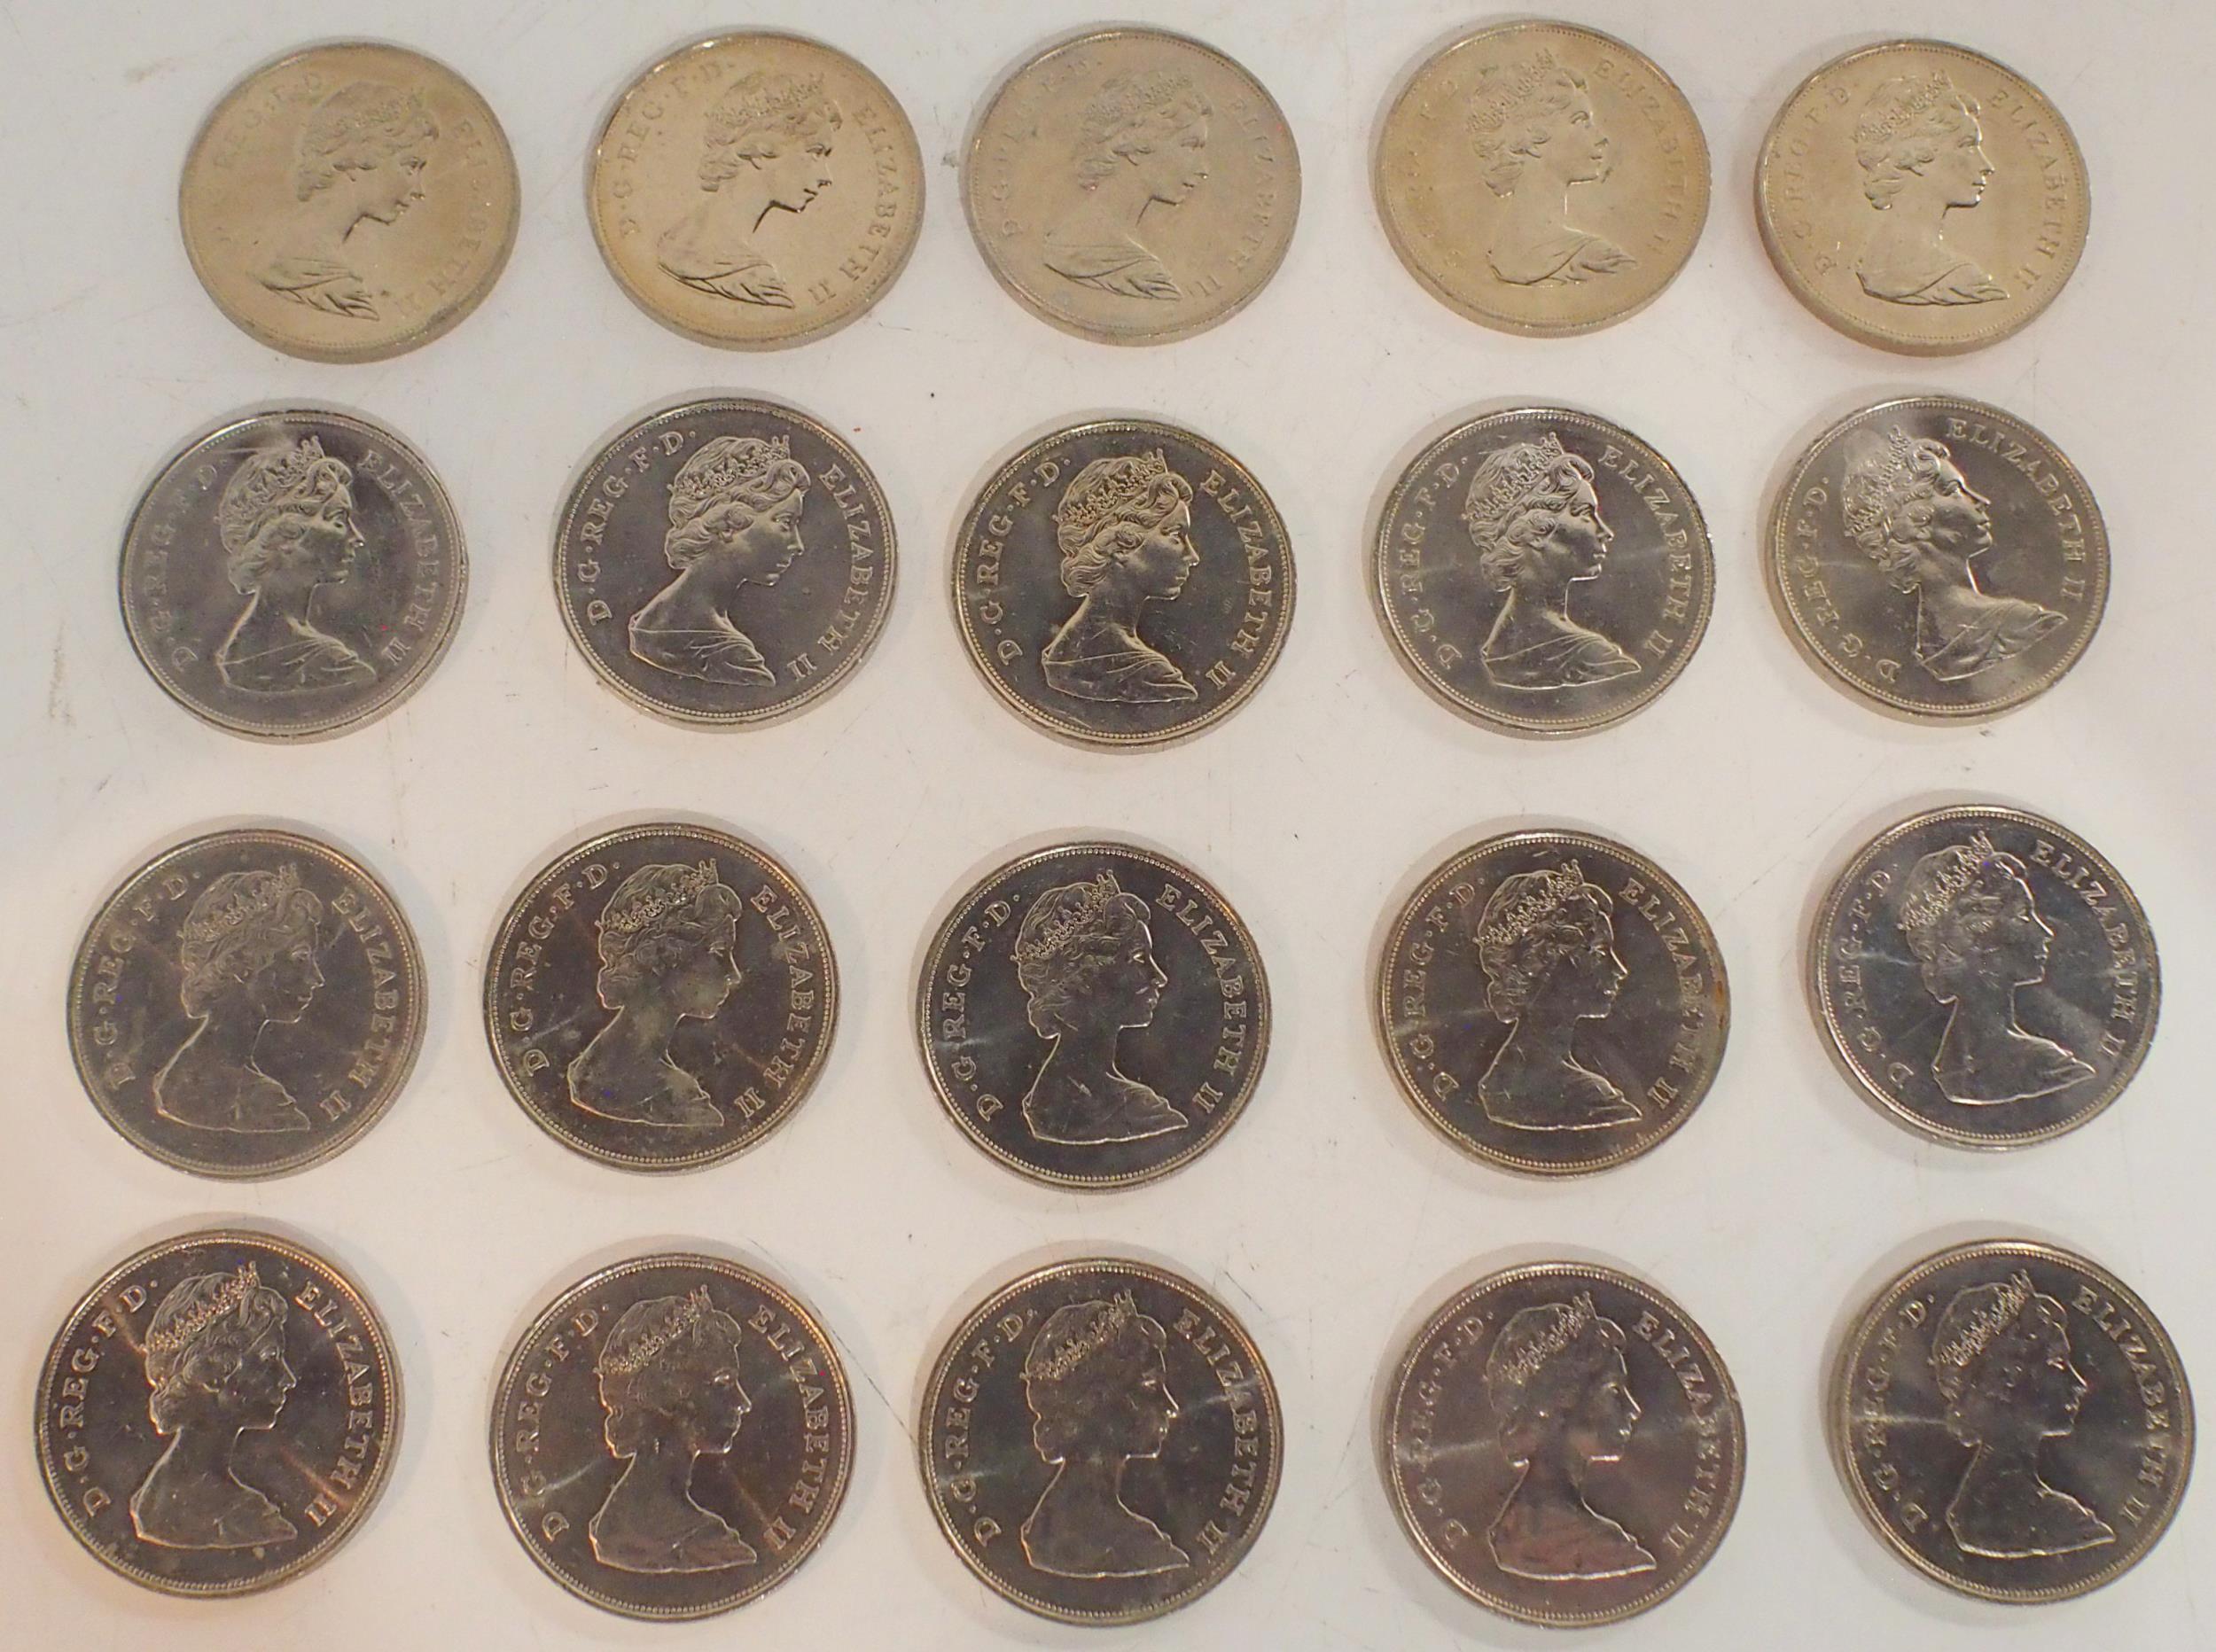 Elizabeth II (1952-2022) 25 New Pence - Elizabeth II Queen Mother Silver Coins (Twenty Pieces) - Image 3 of 3